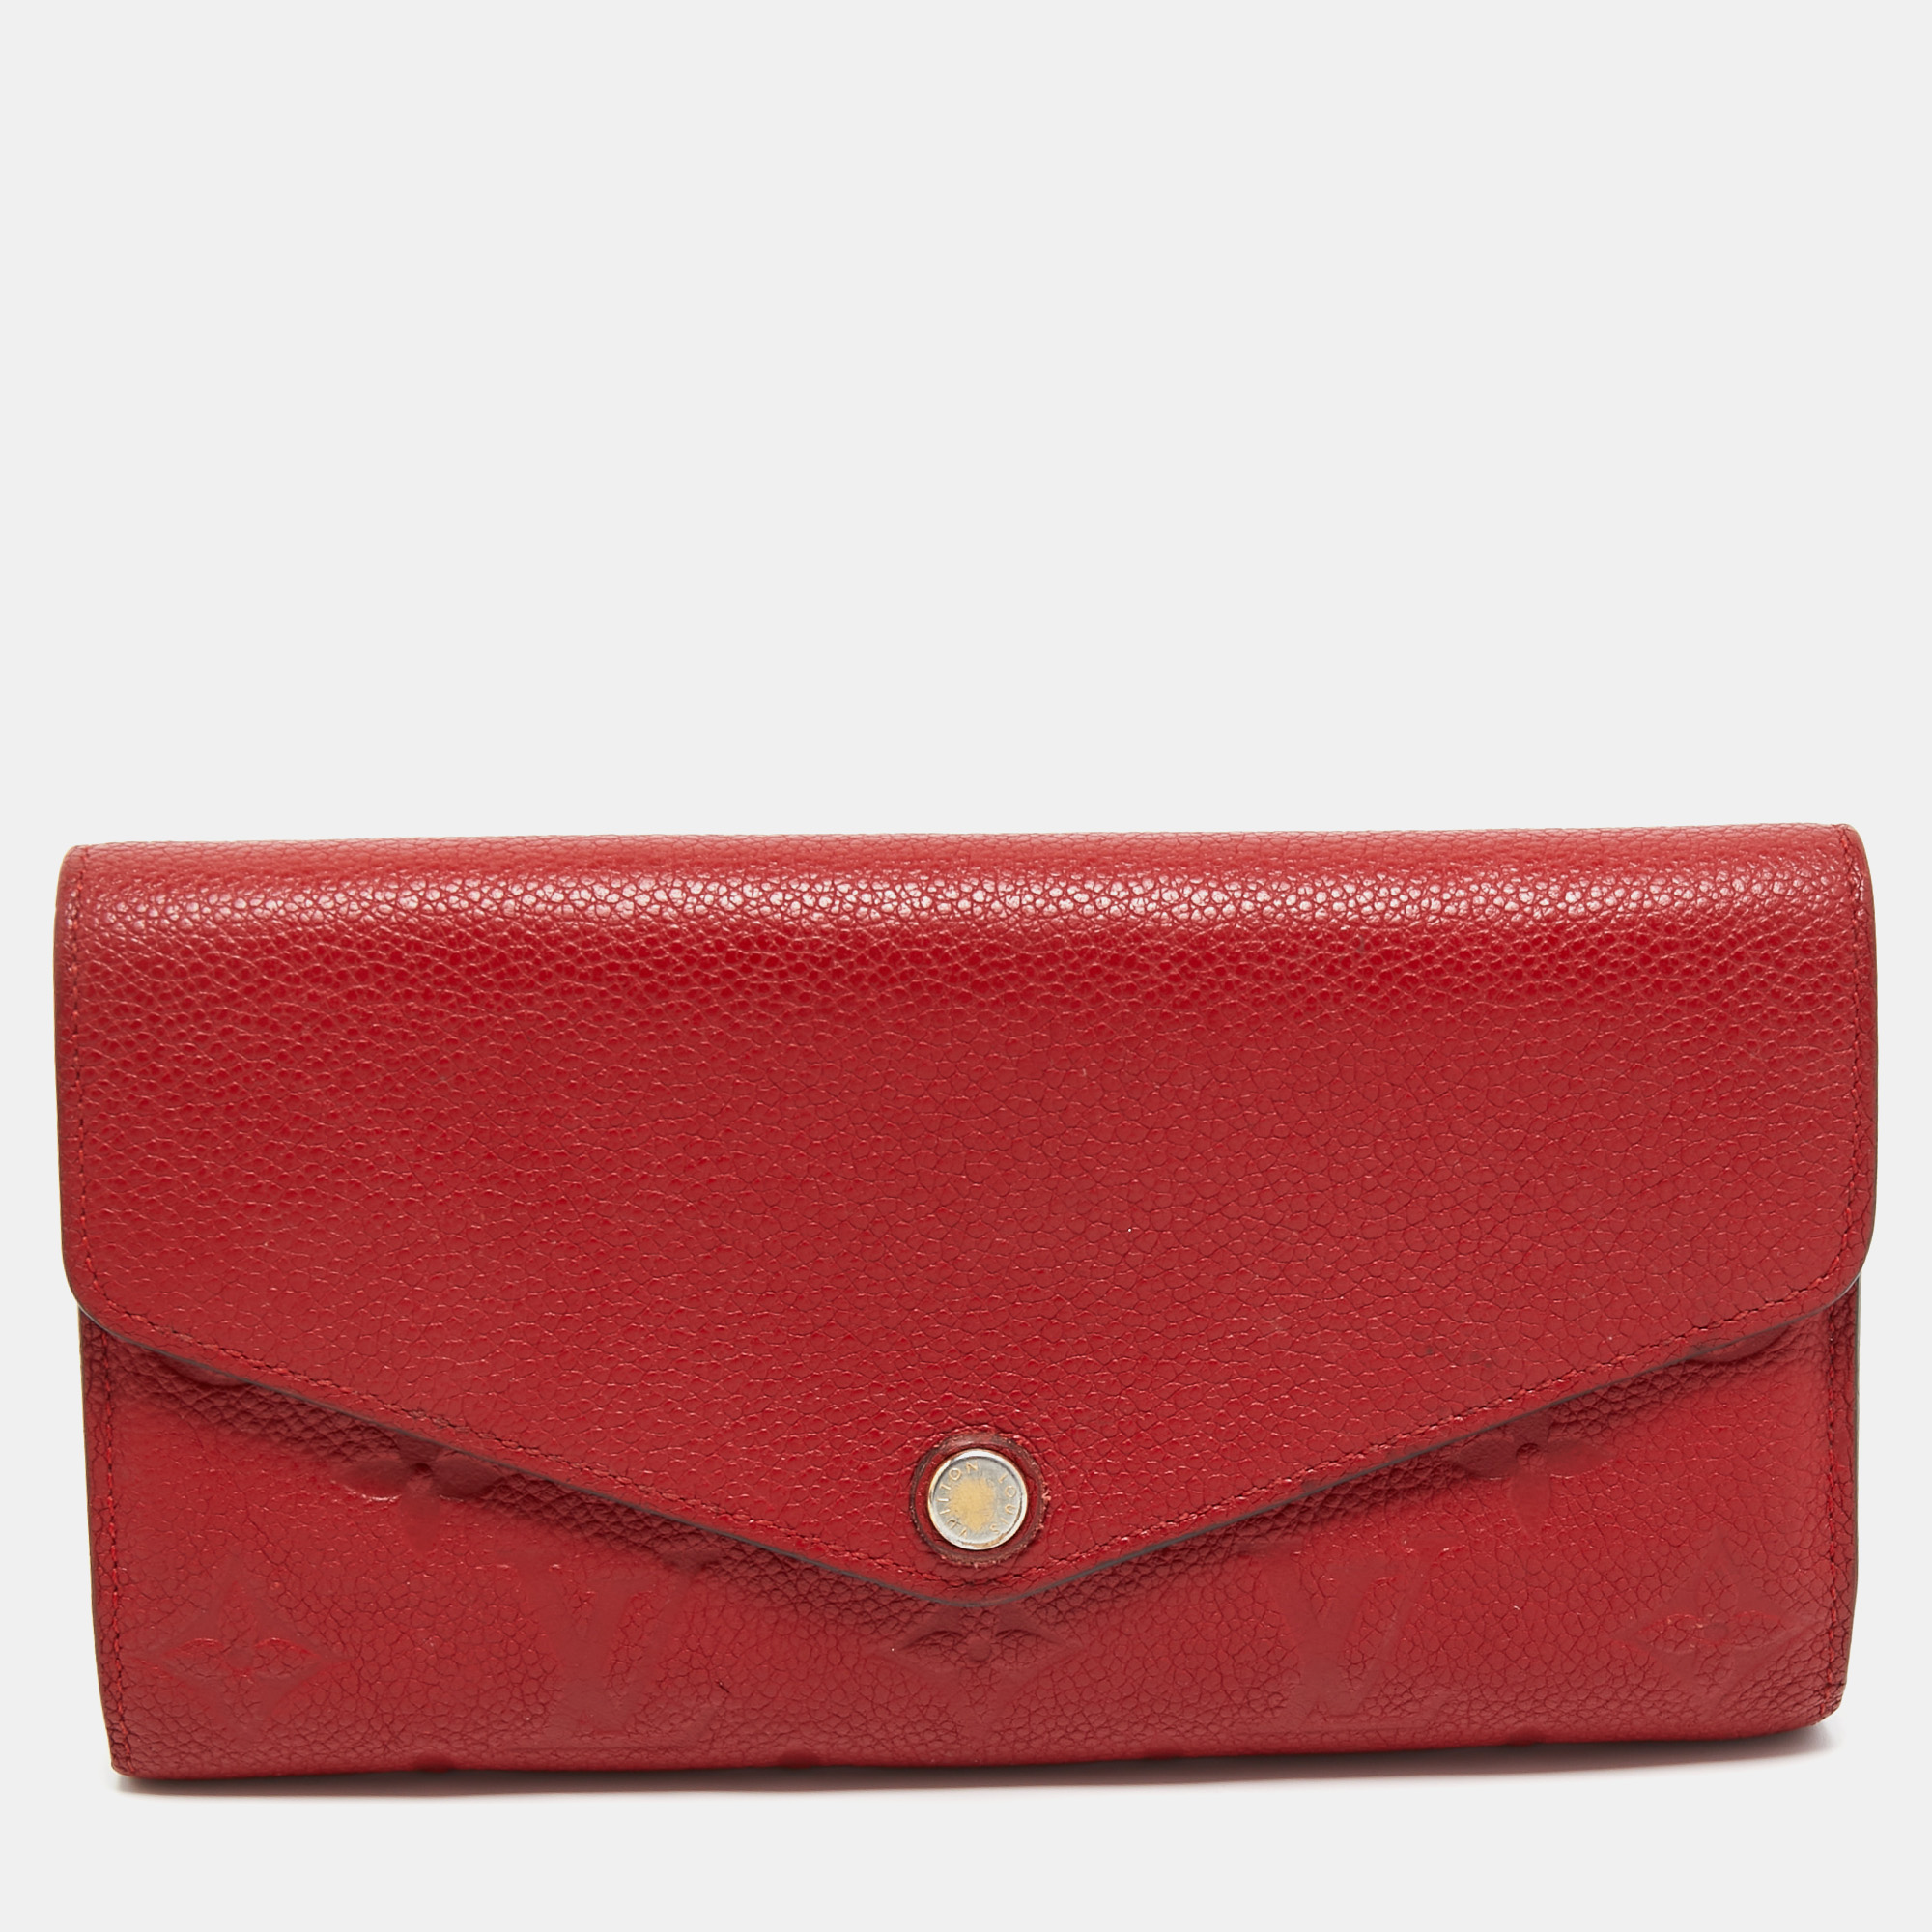 Louis vuitton red monogram empreinte leather sarah wallet